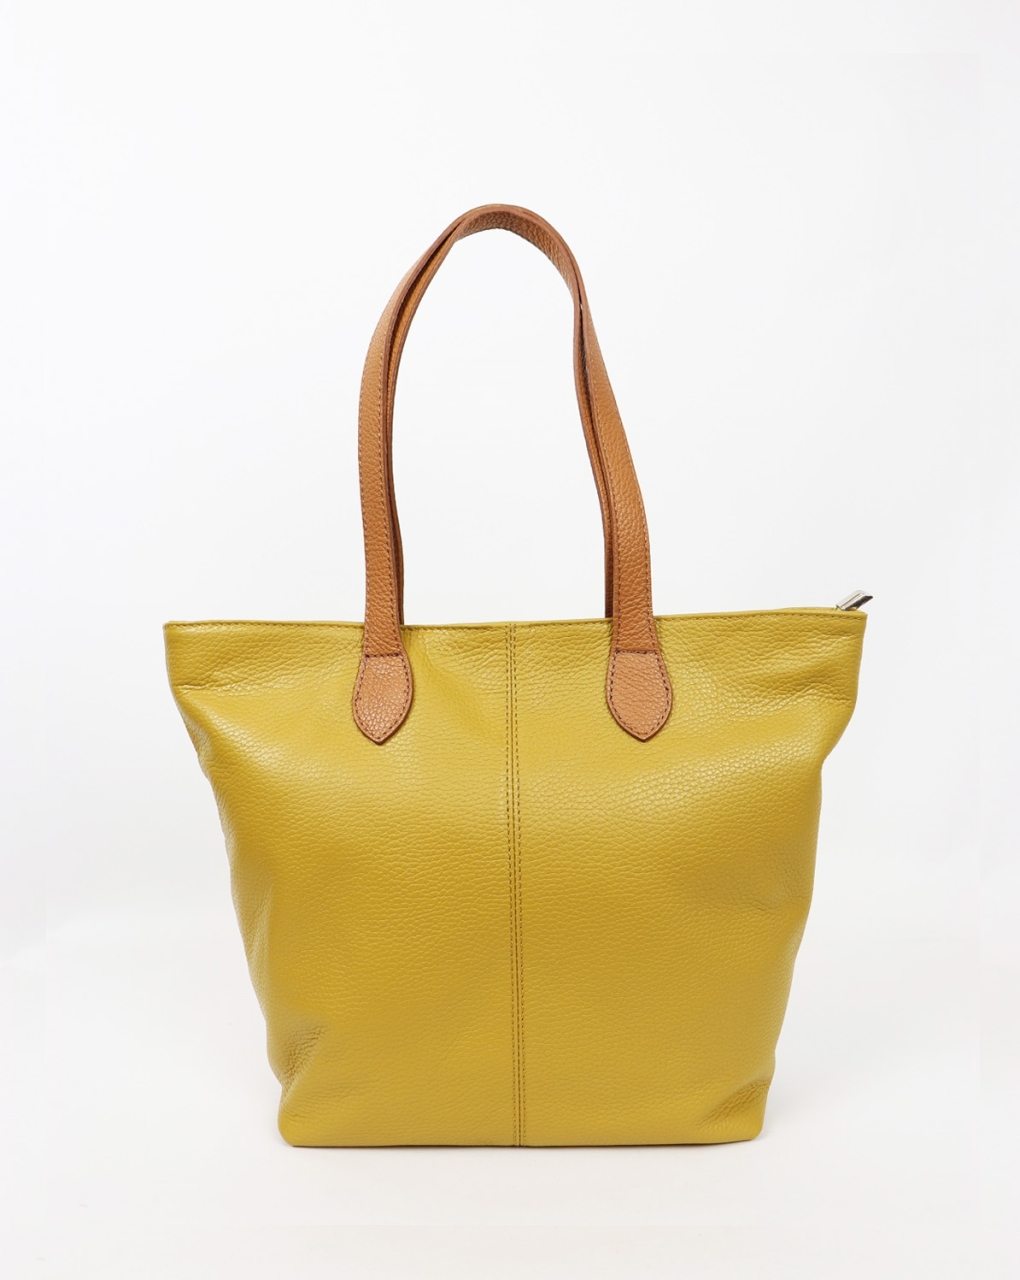 Italian Leather 2-Tone Zipper Shopper: Mustard & Tan - Daj Collection